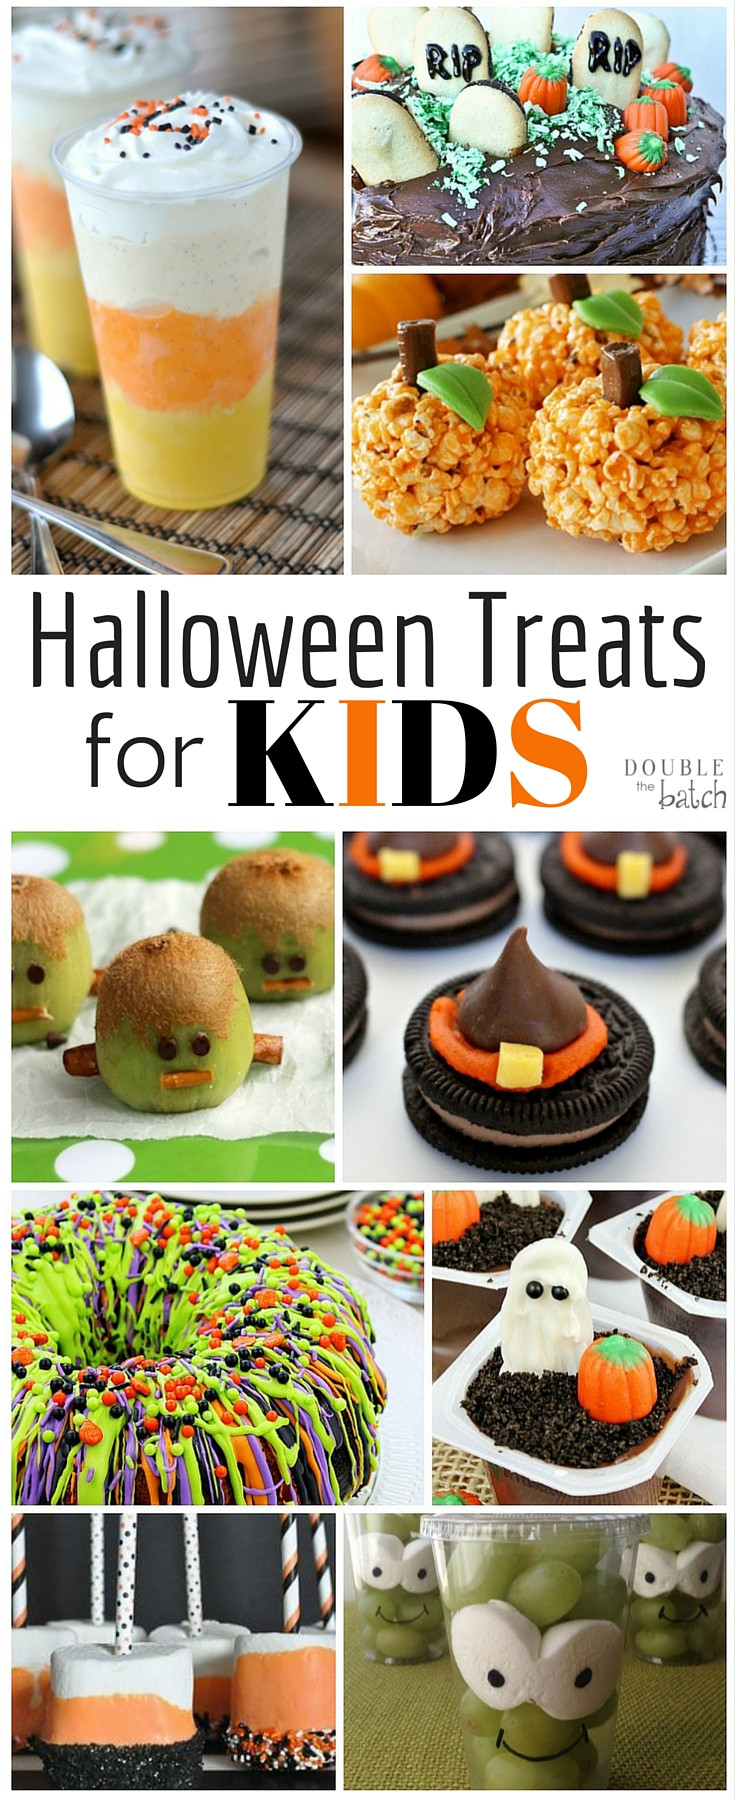 Halloween Desserts For Kids
 Fun Halloween Treats for Kids Double the Batch